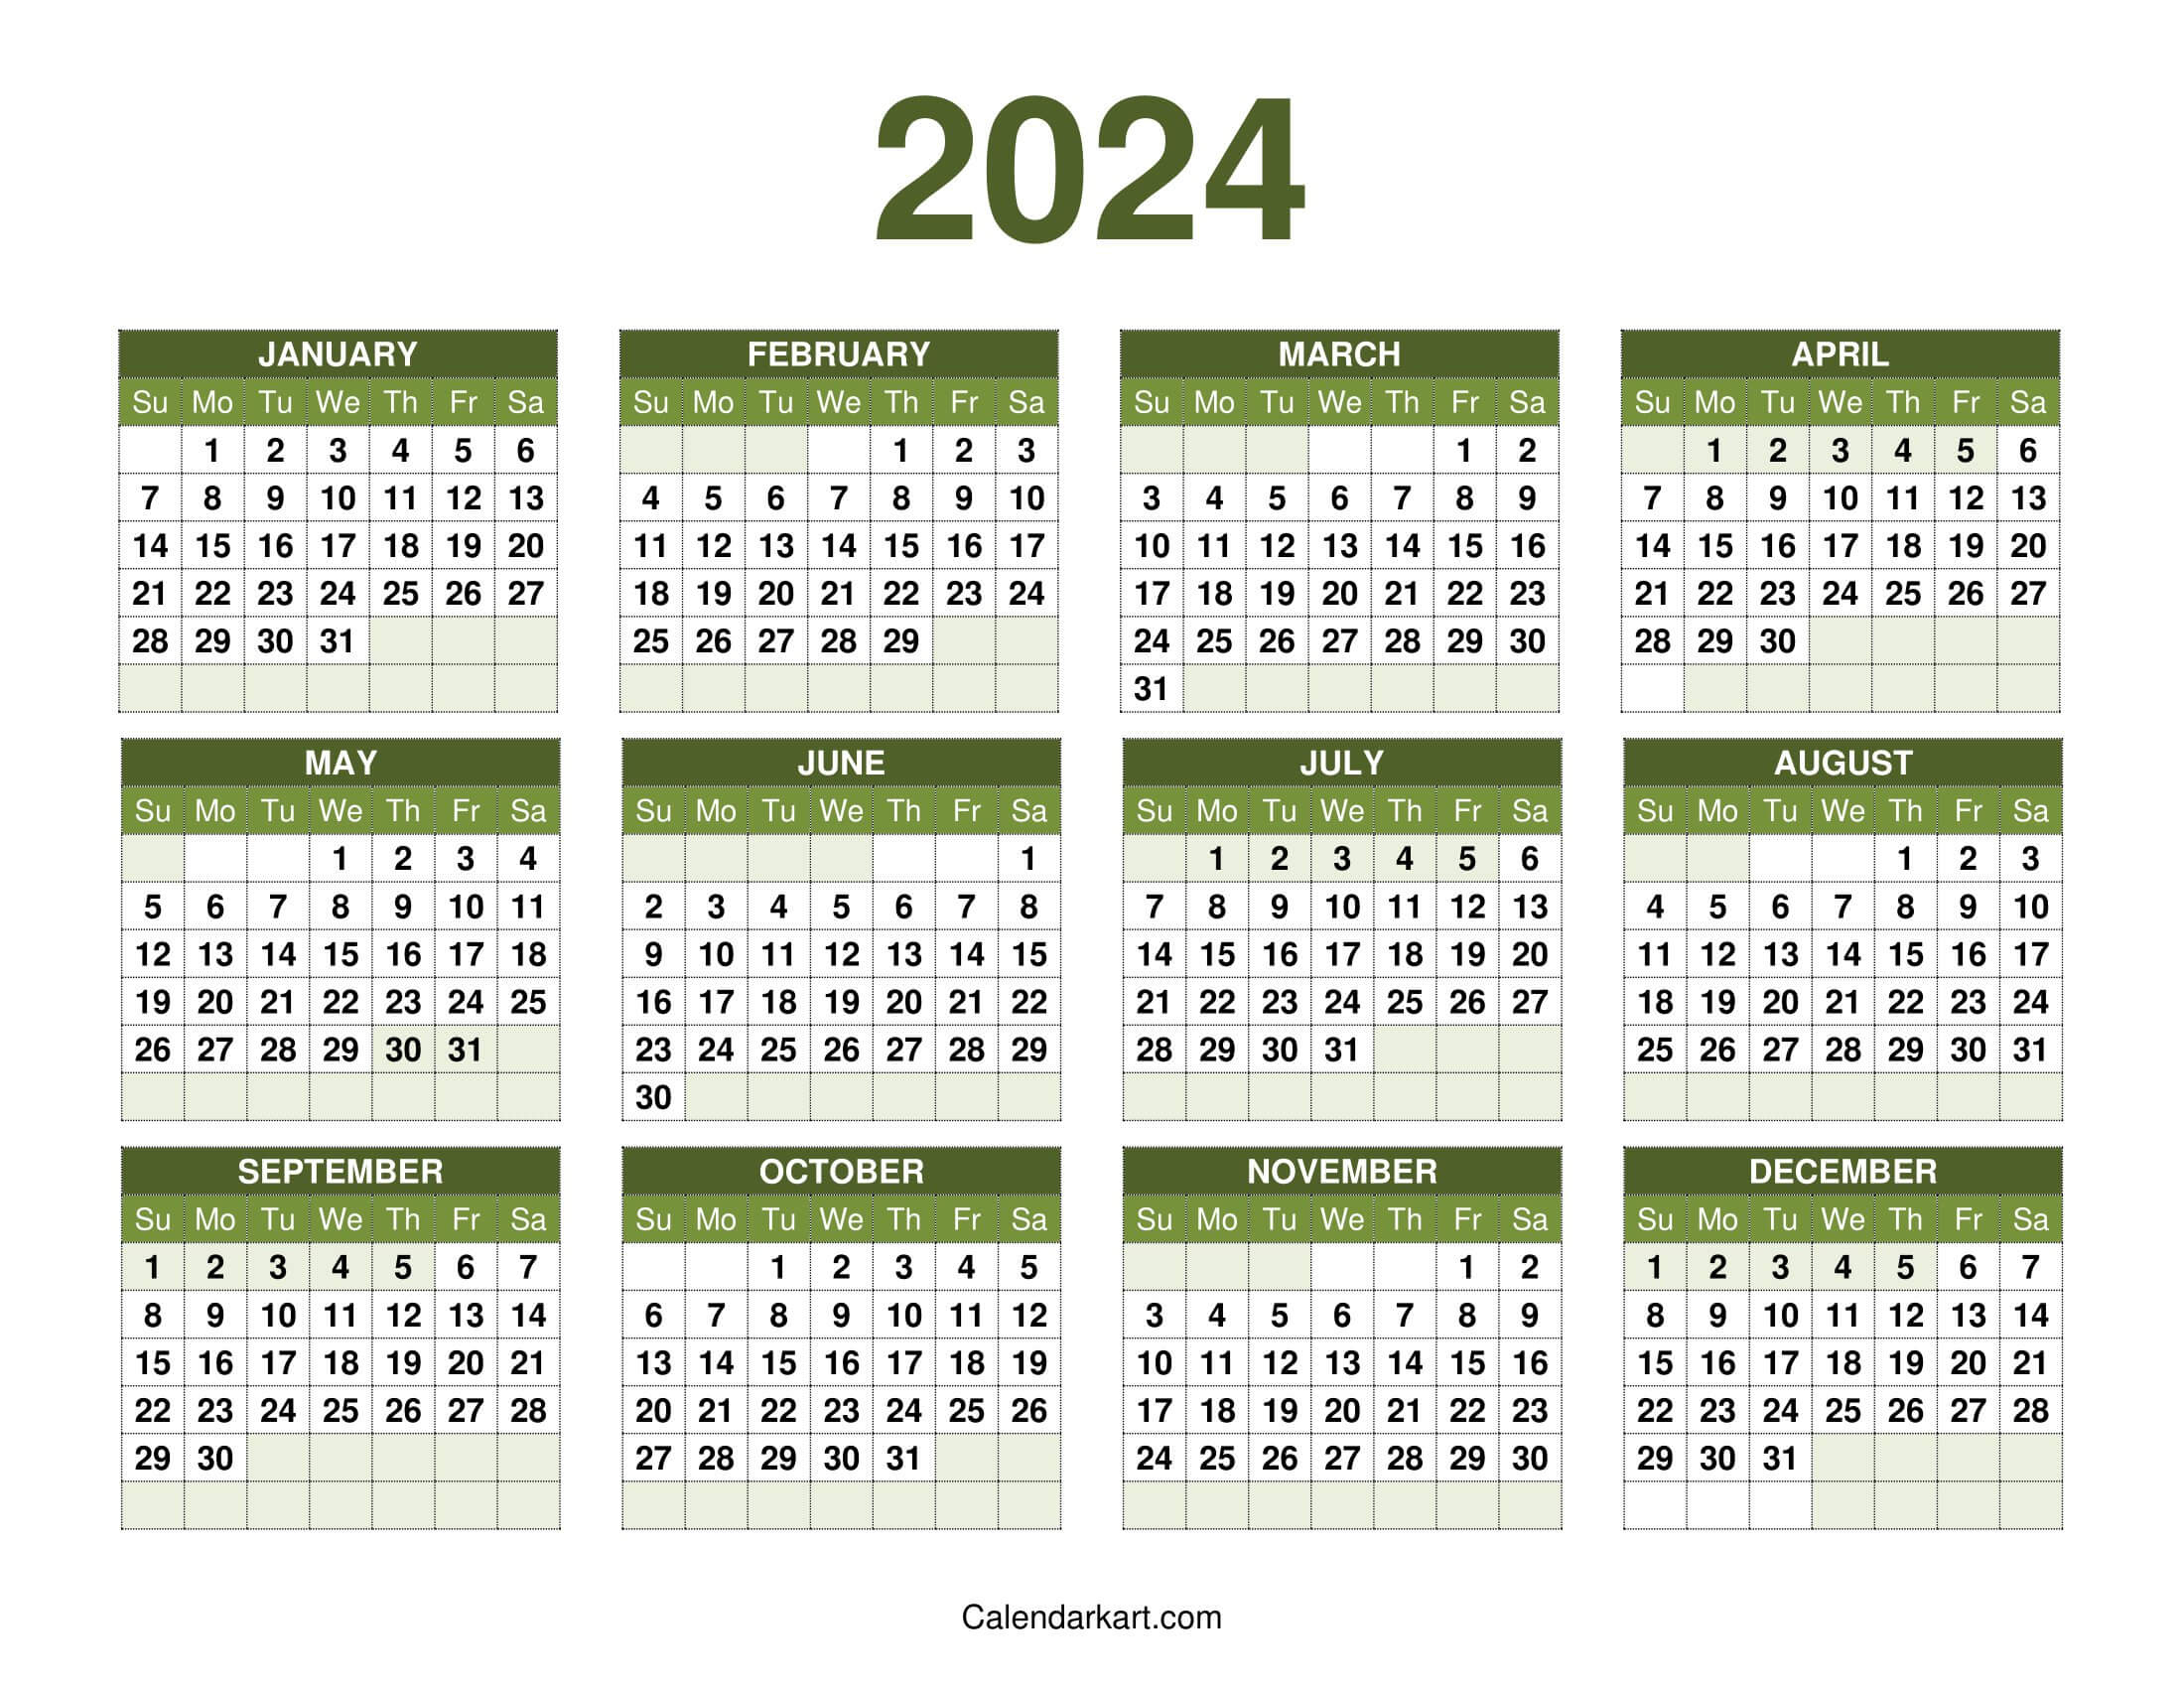 Free Printable Year At A Glance Calendar 2023-2024 - Calendarkart | 2024 Yearly Calendar At A Glance